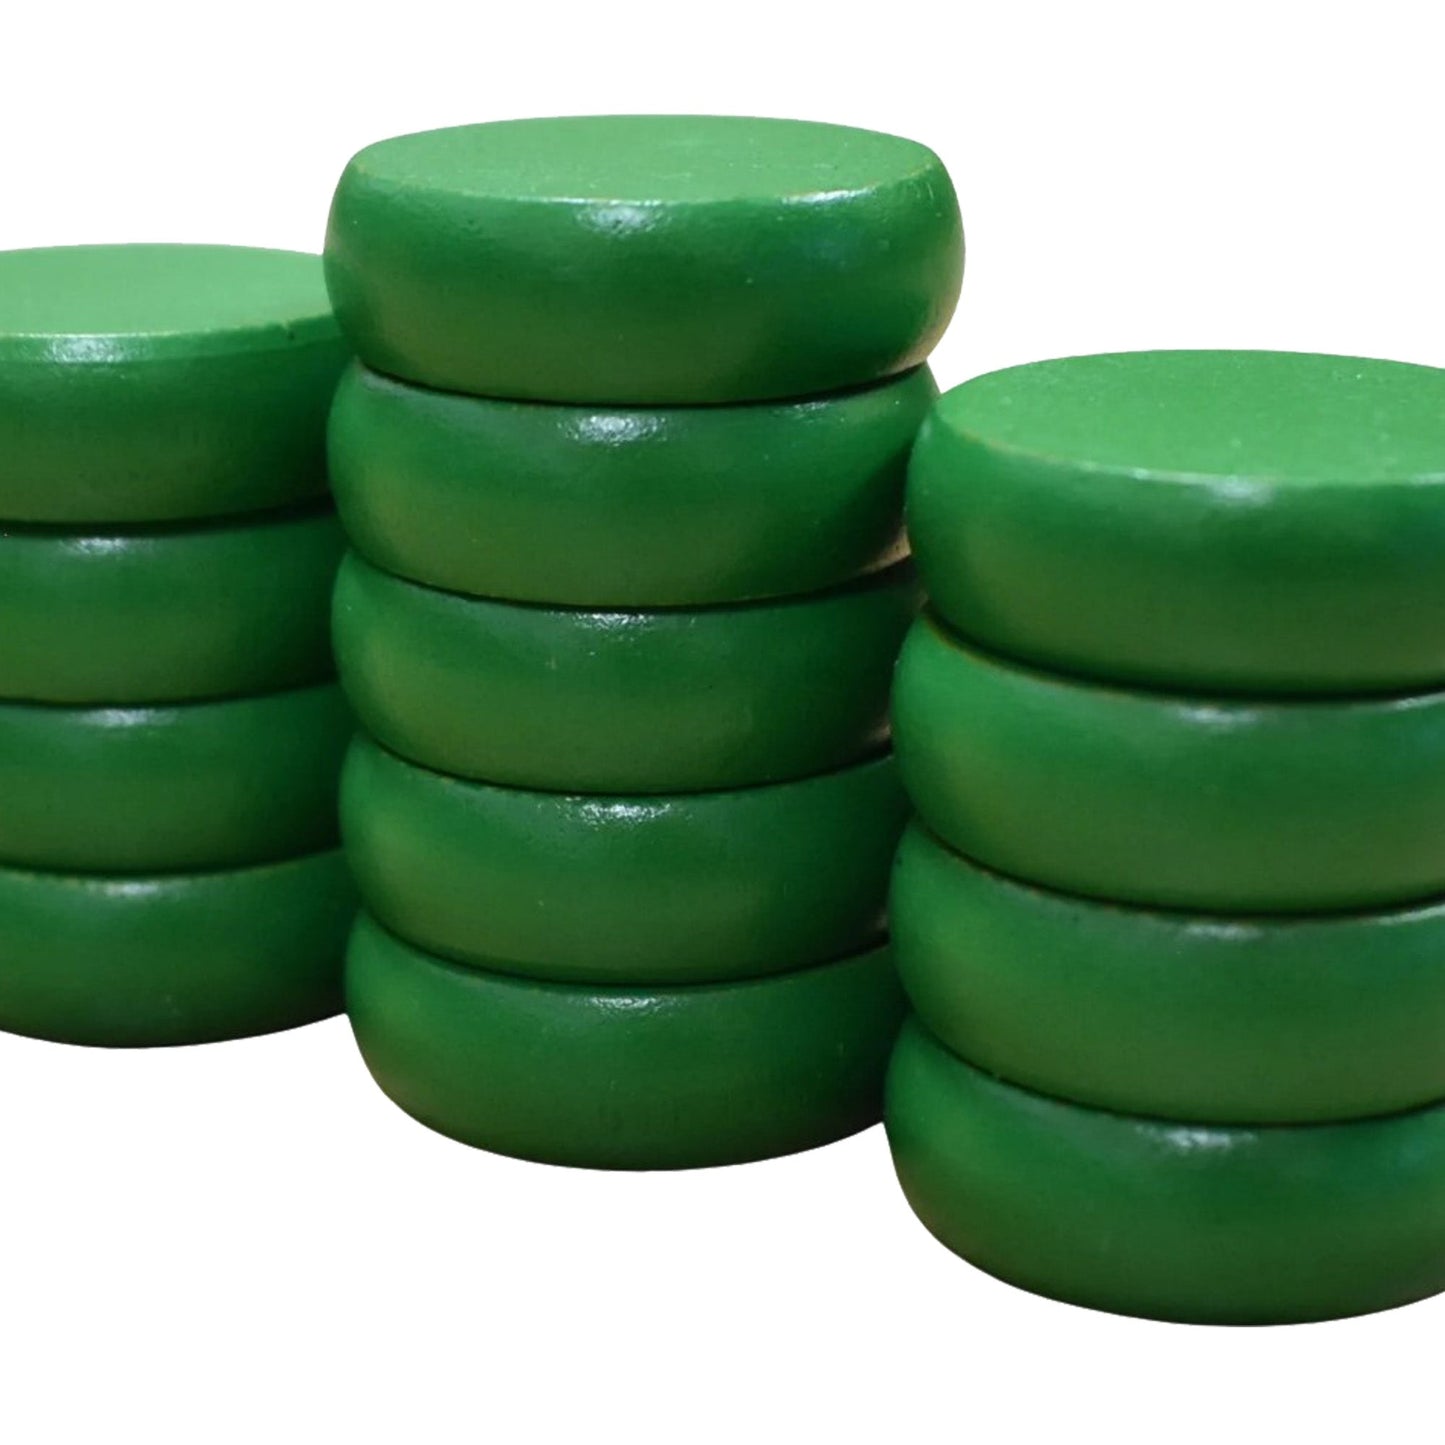 Green crokinole tournament discs